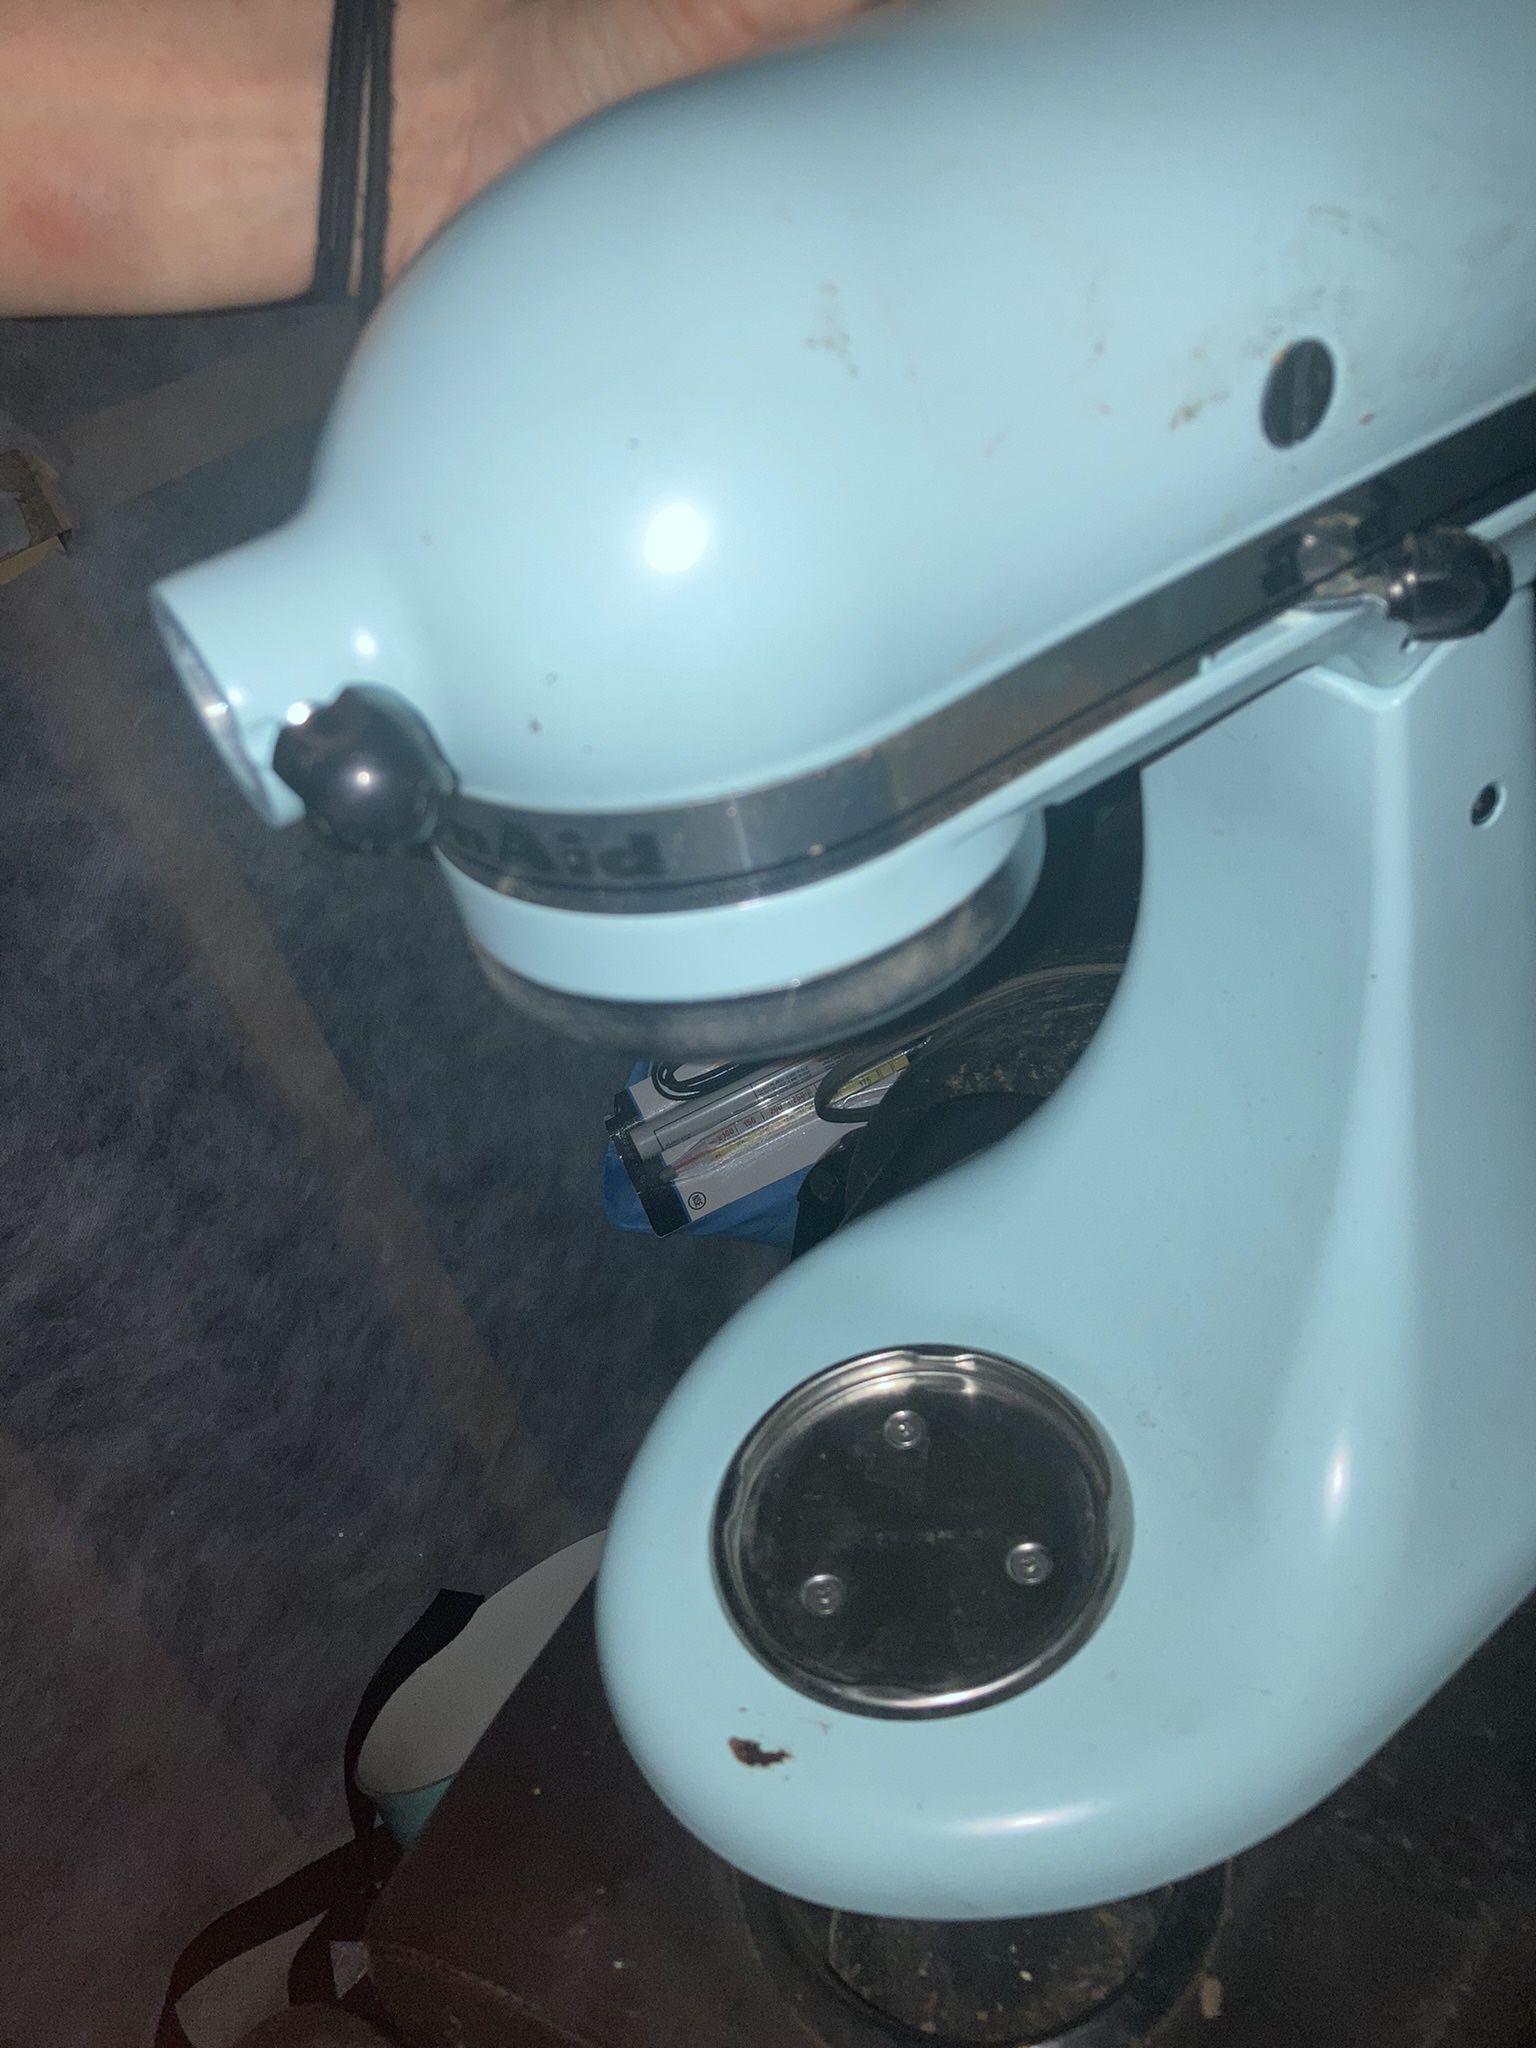 Kitchenaid Artisan Tilt-head Stand Mixer Teal/Blue Color for Sale